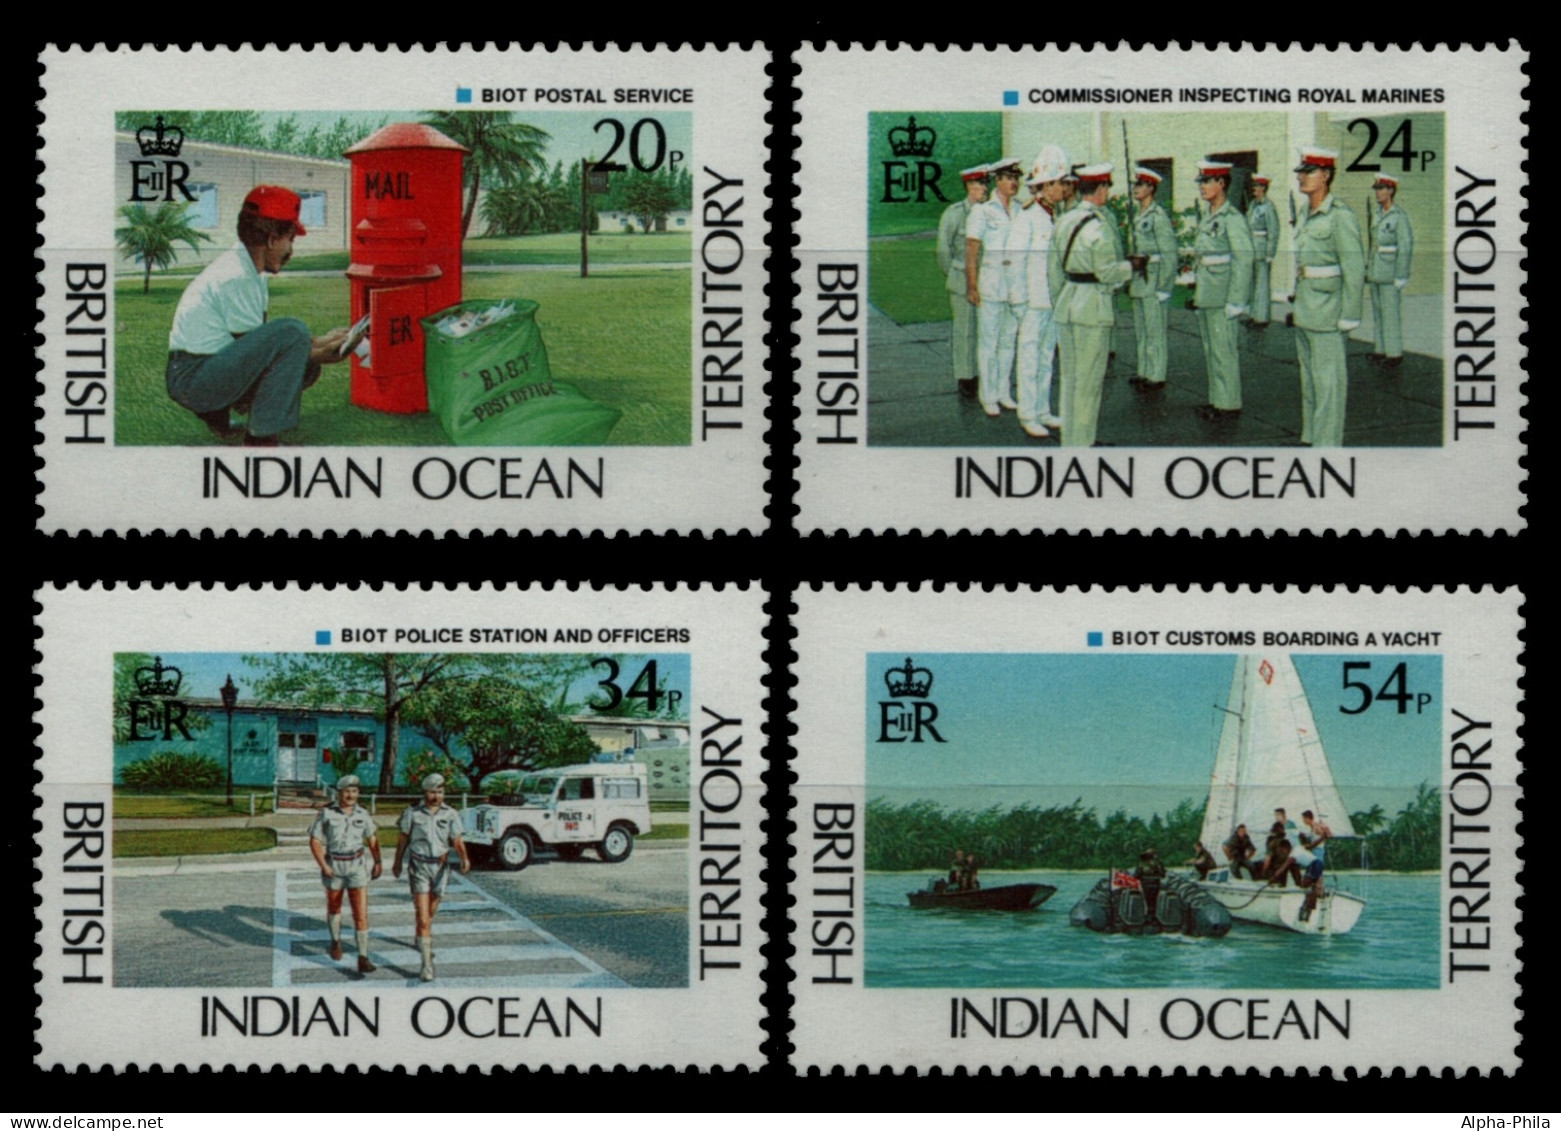 BIOT 1991 - Mi-Nr. 111-114 ** - MNH - Post - Polizei - Zoll - British Indian Ocean Territory (BIOT)